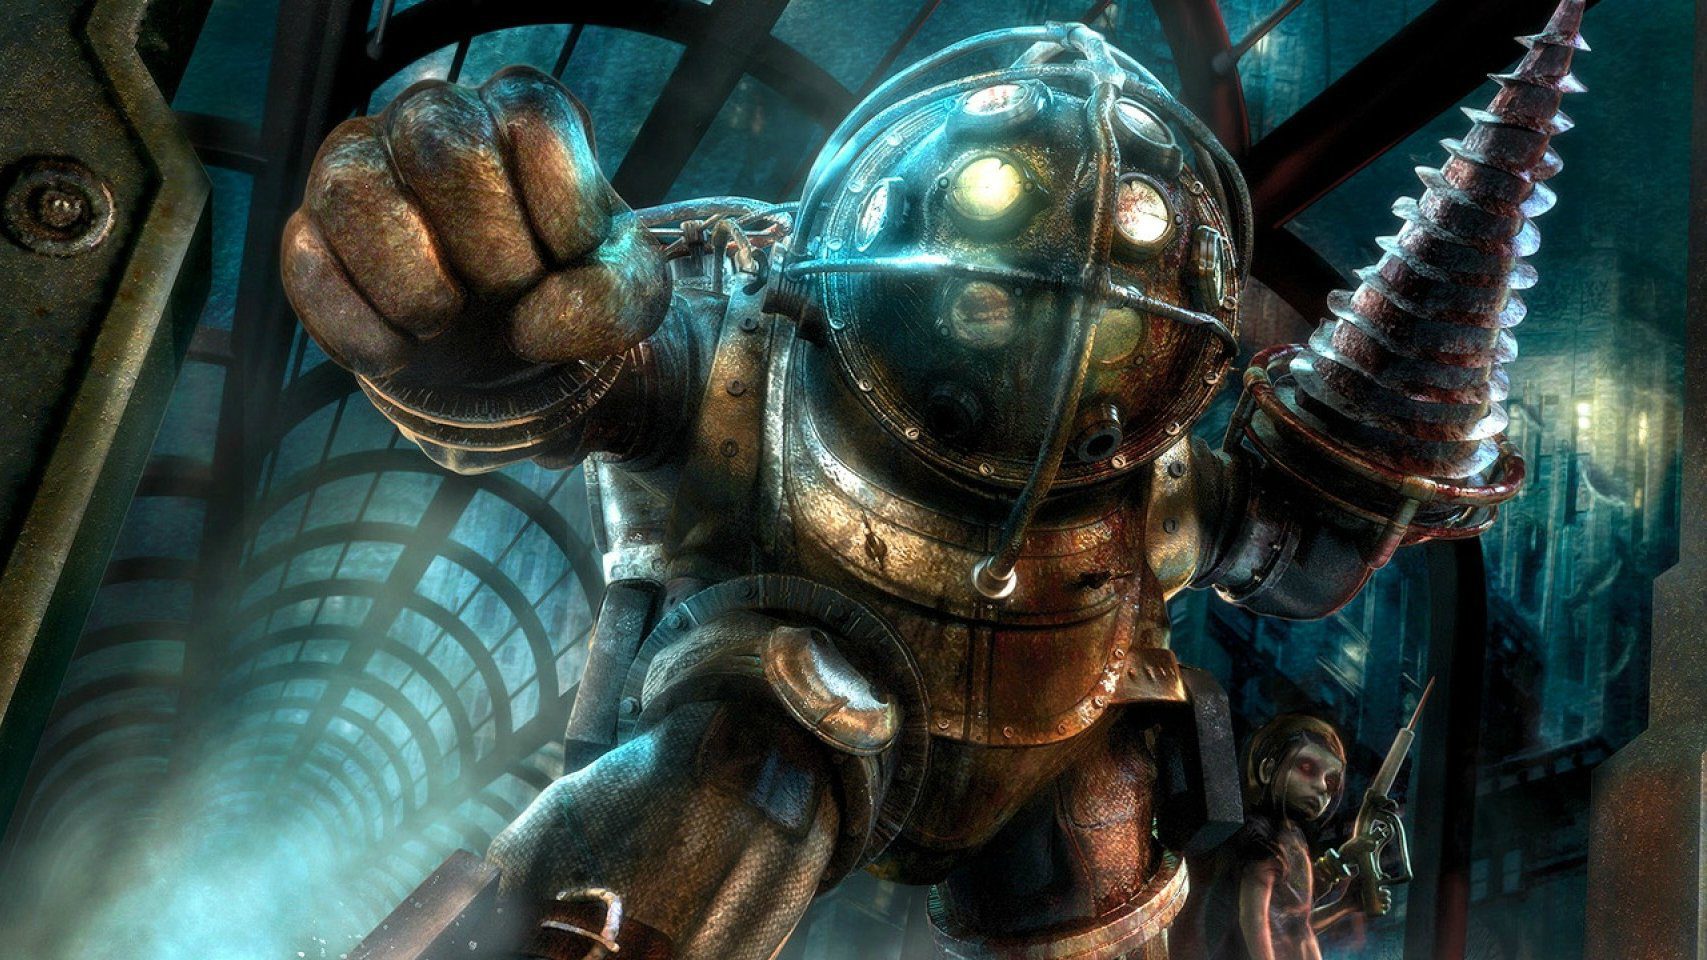 BioShock 1 & 2 Join GOG.COM’s Winter Sale